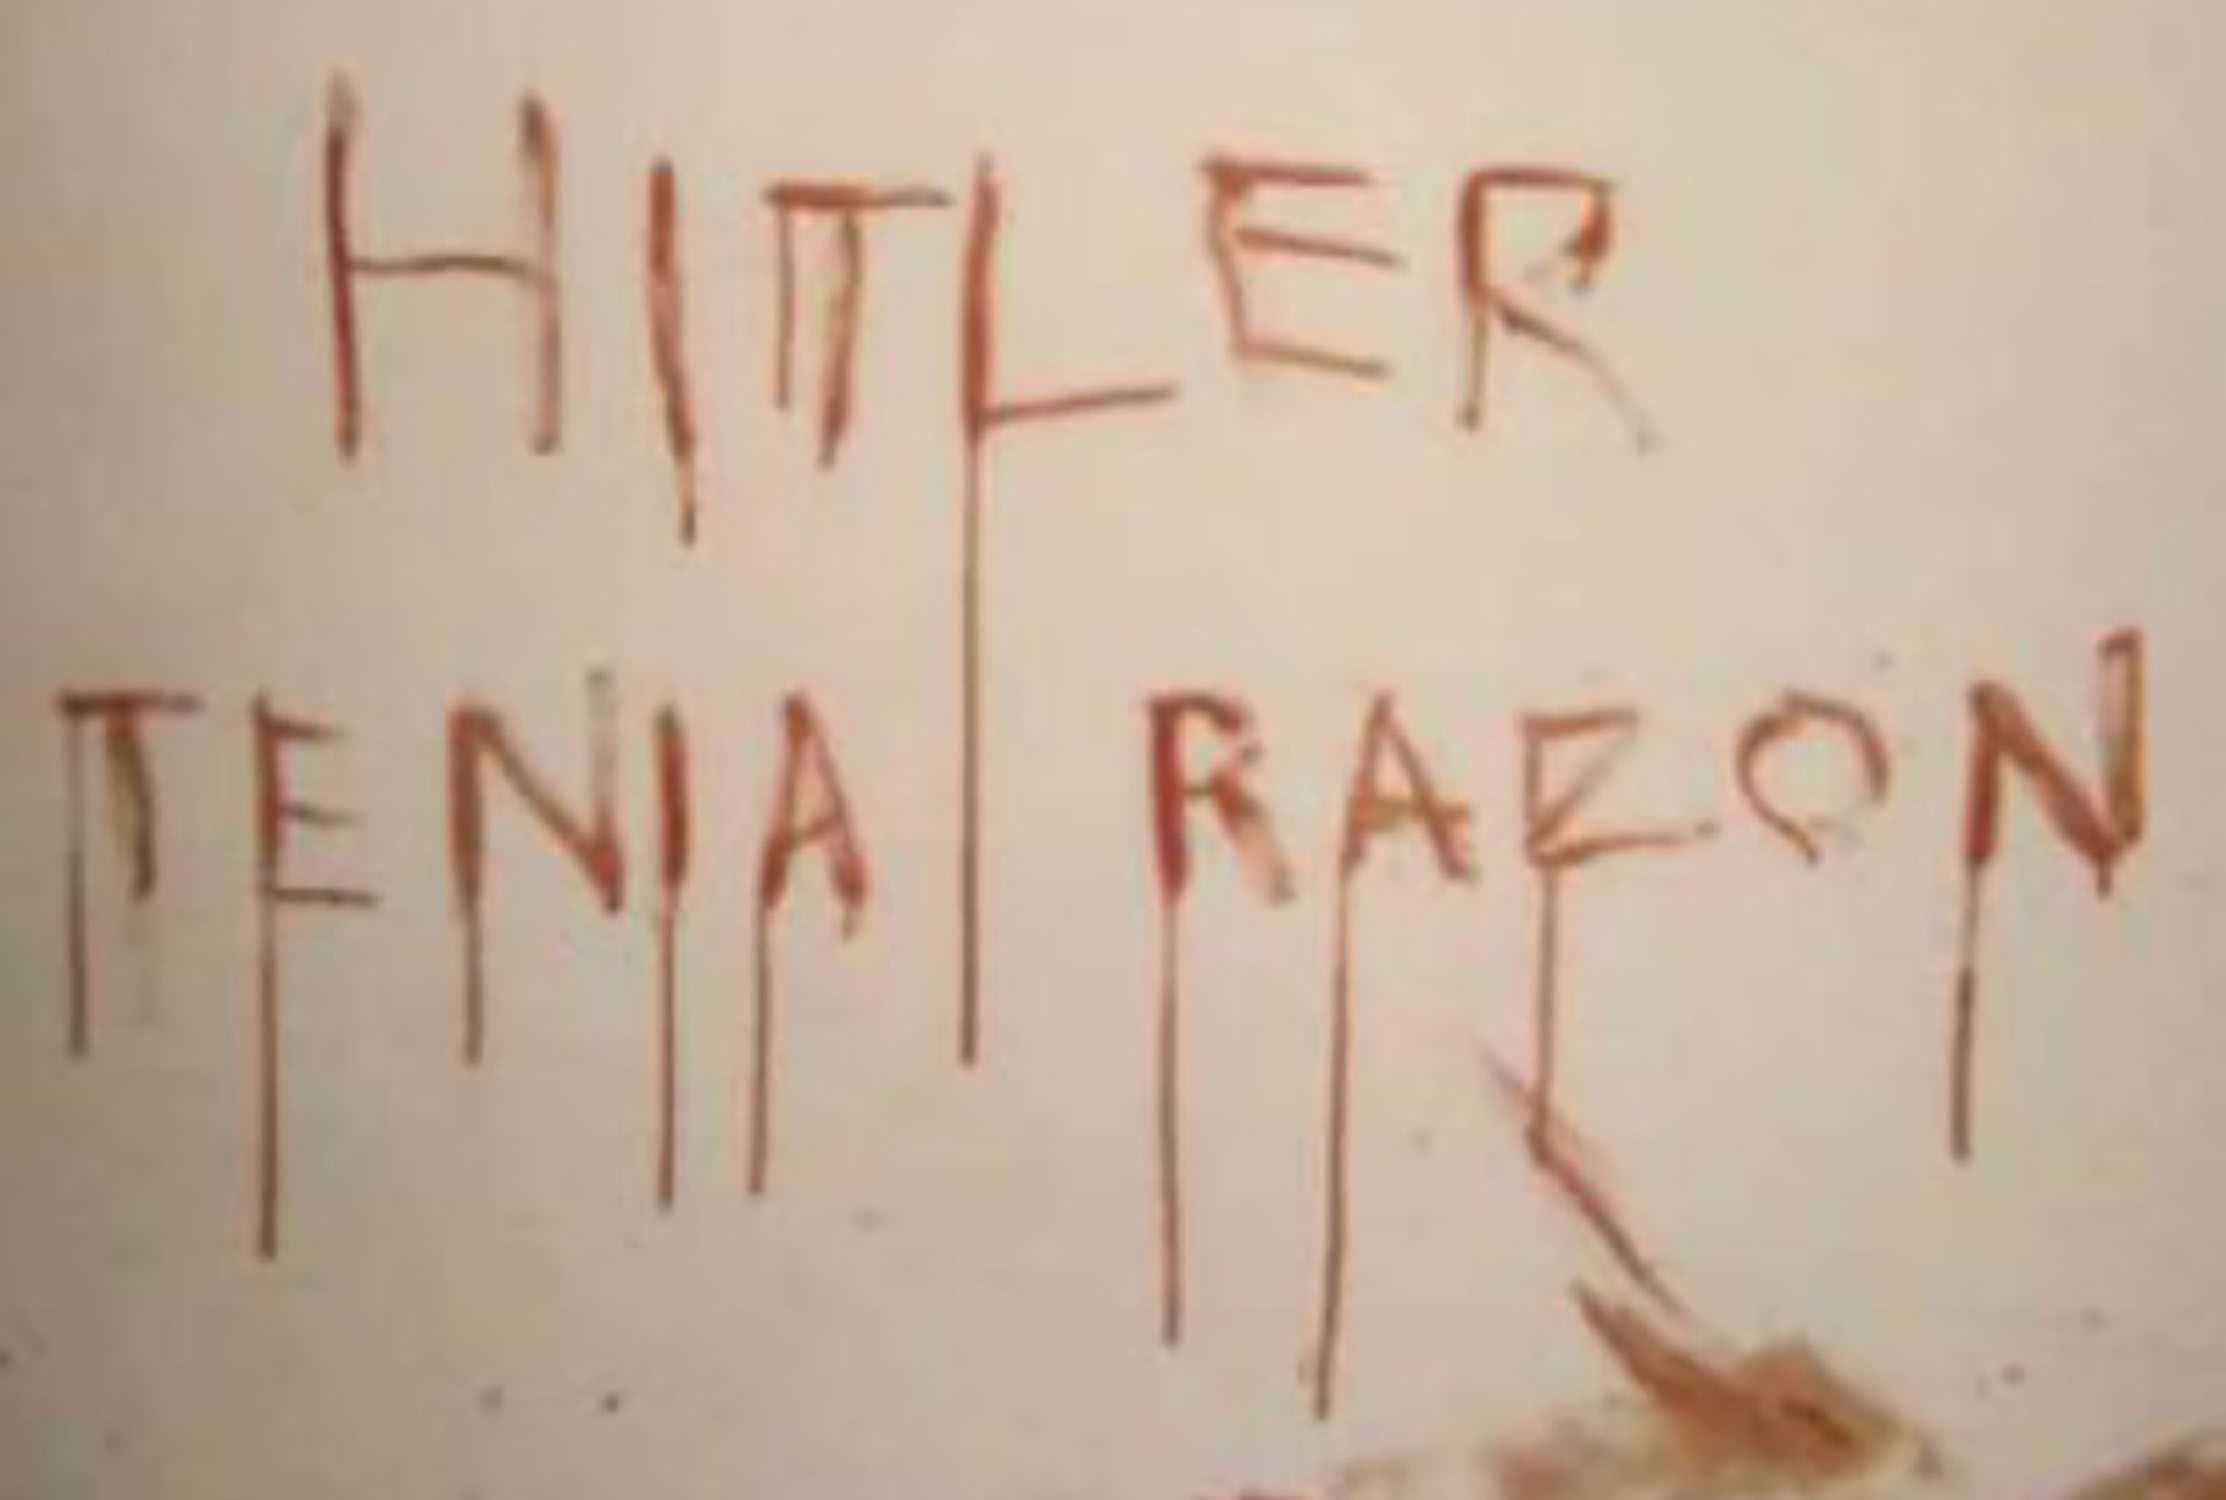 Hitler Tenia Razon